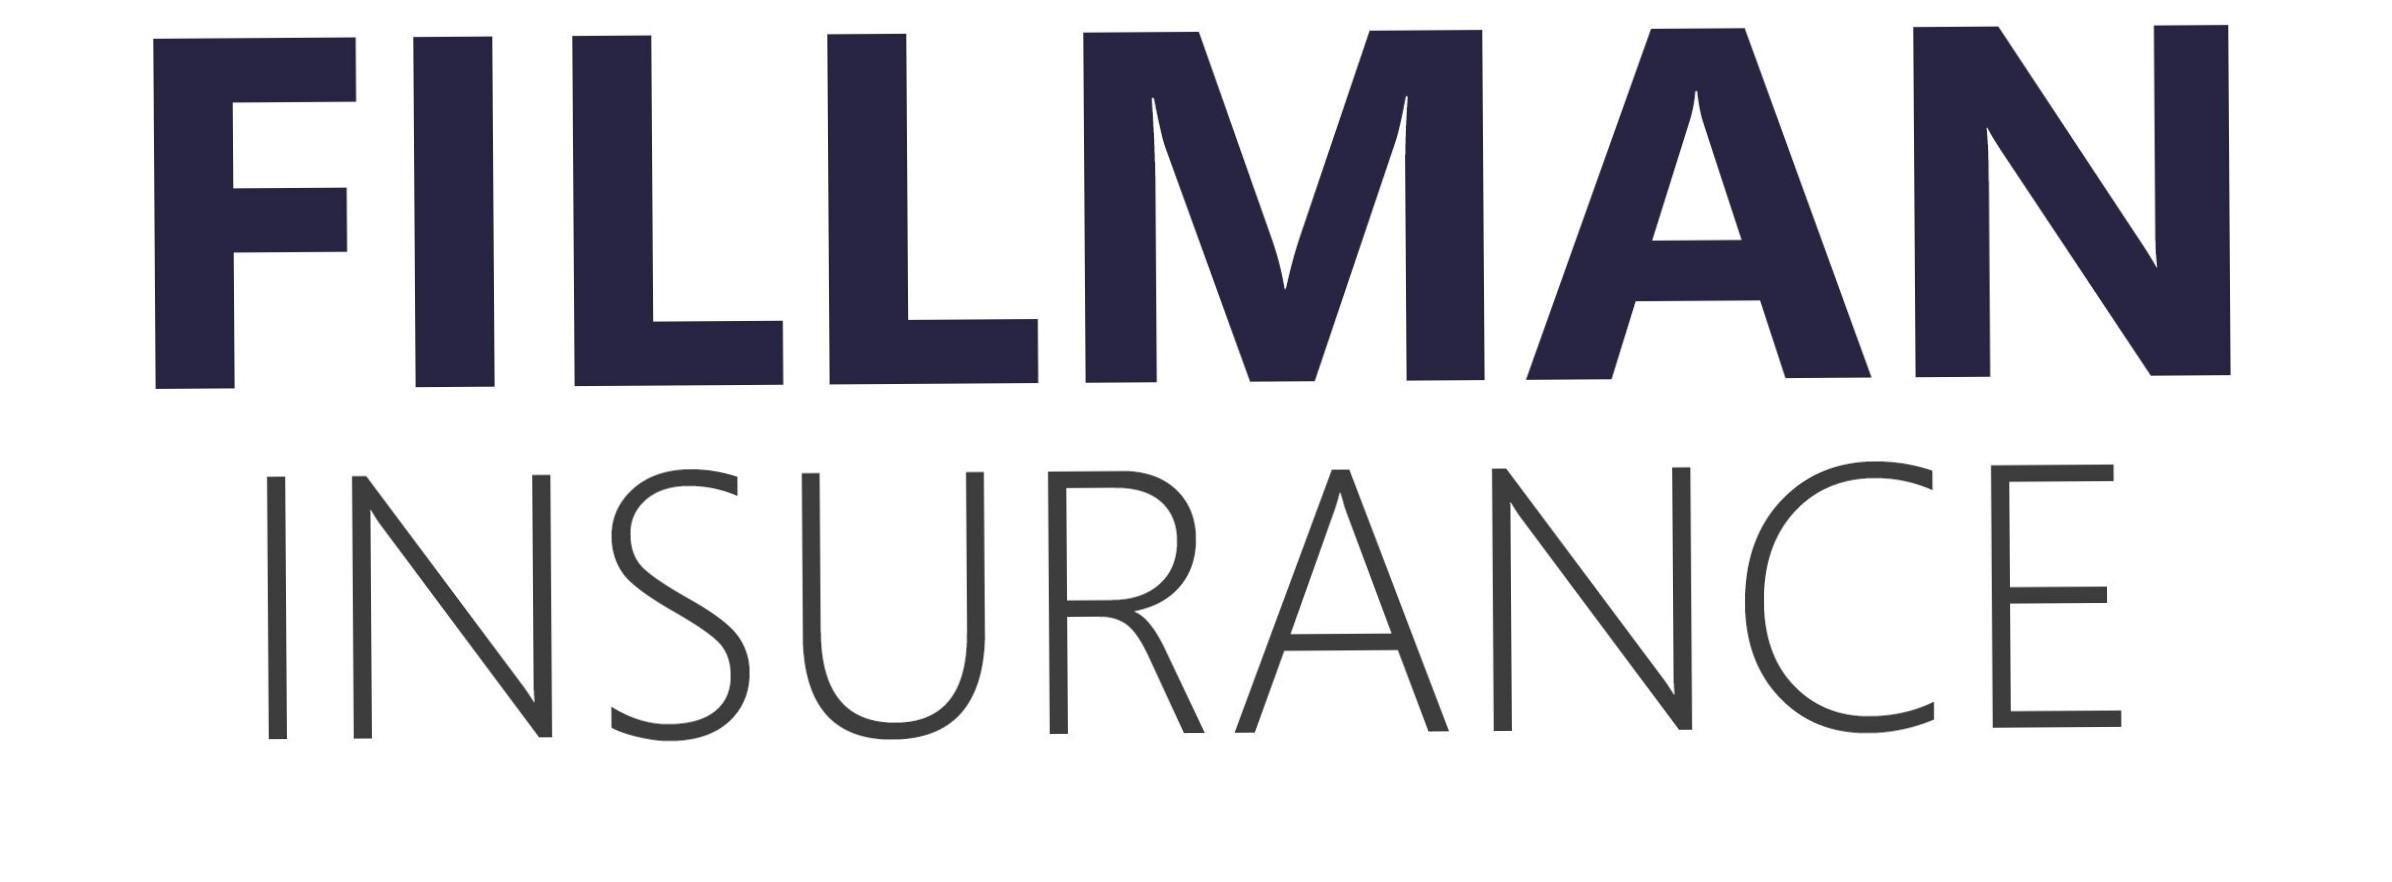 Fillman Insurance Agency's Image